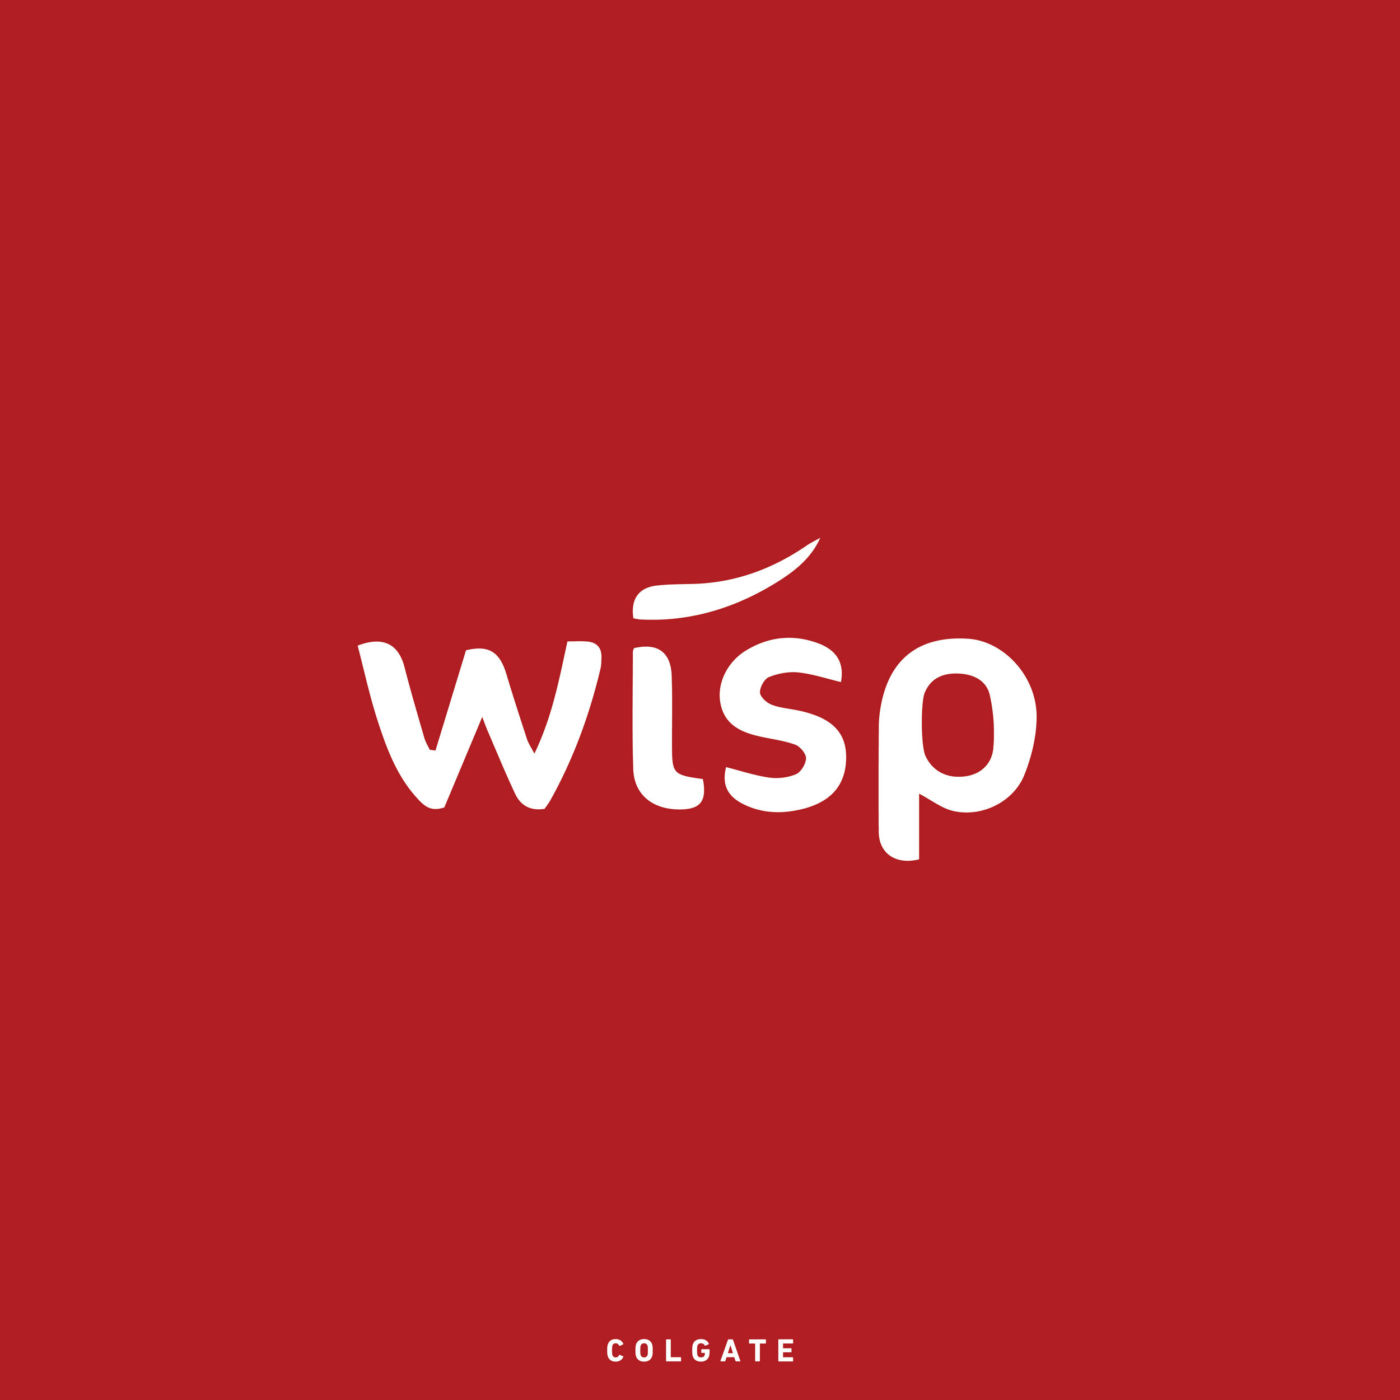 Wisp (Colgate)